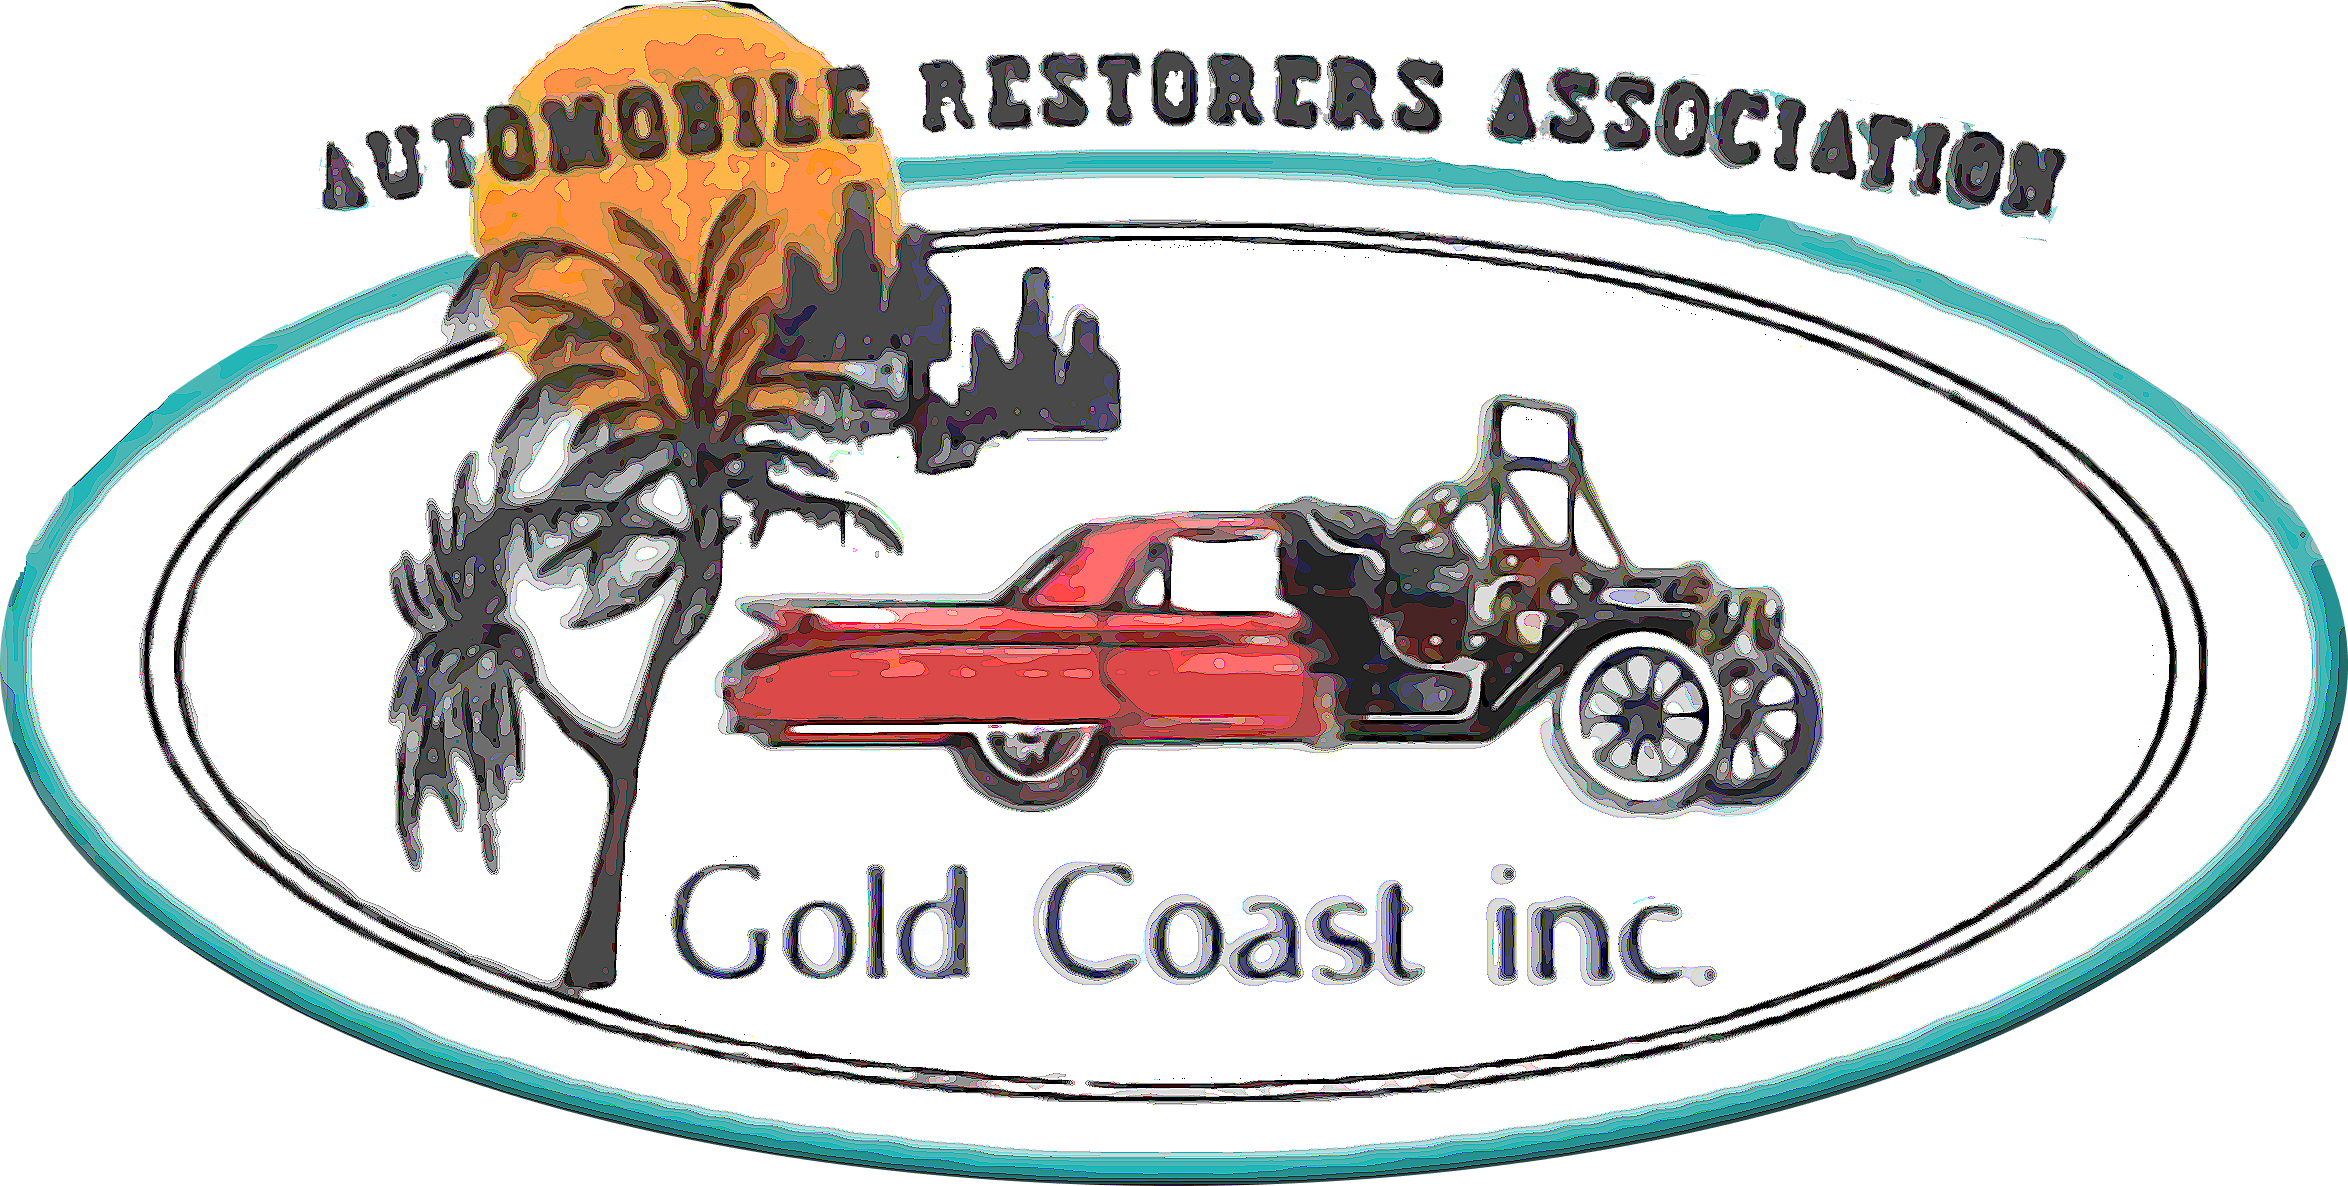 Automobile Restorers Association Gold Coast 